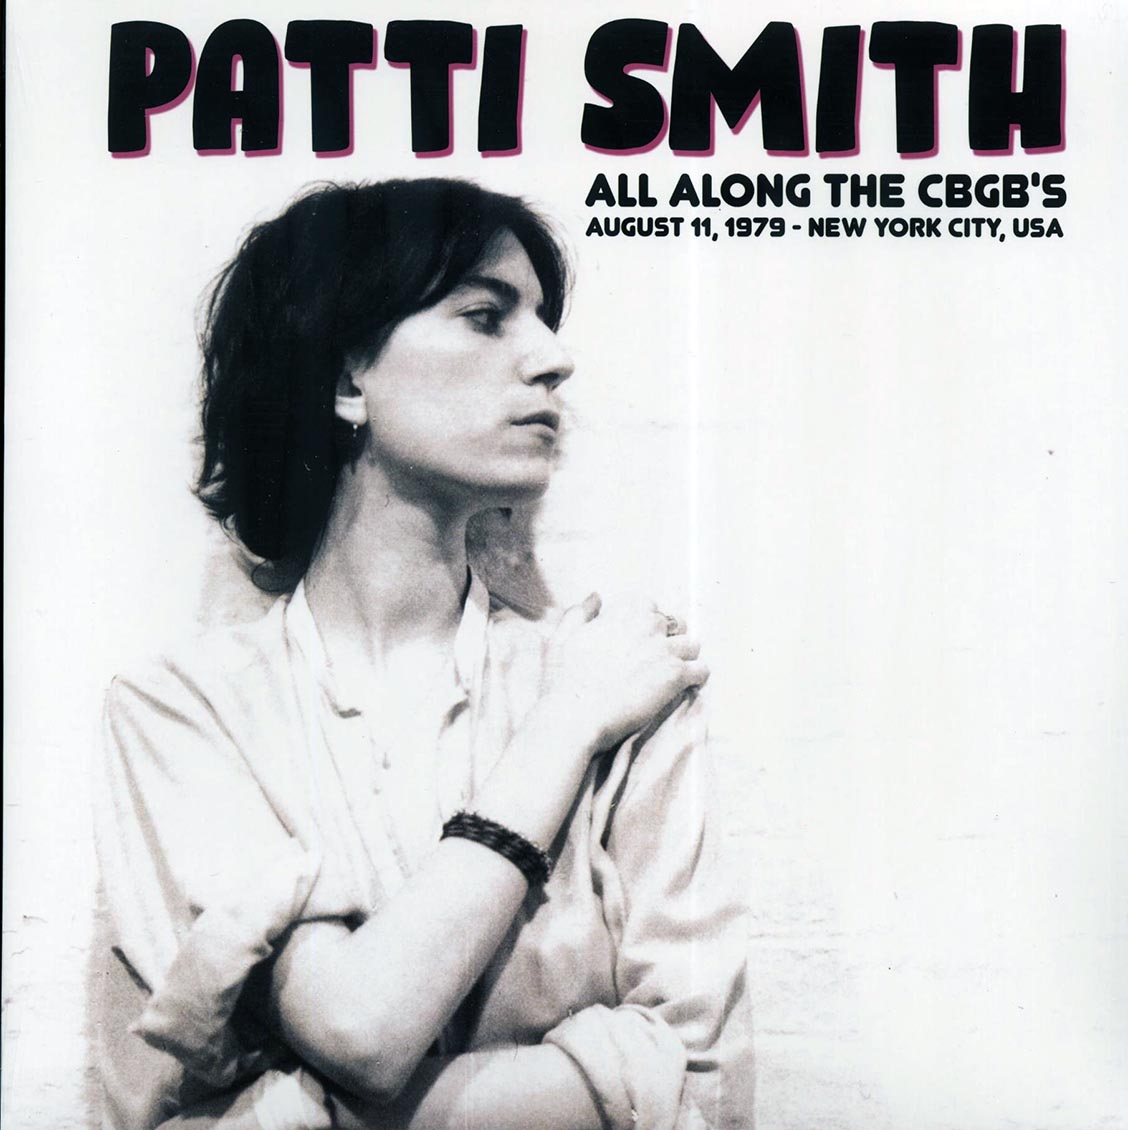 Patti Smith - All Along The CBGB's, August 11, 1979, New York City, USA